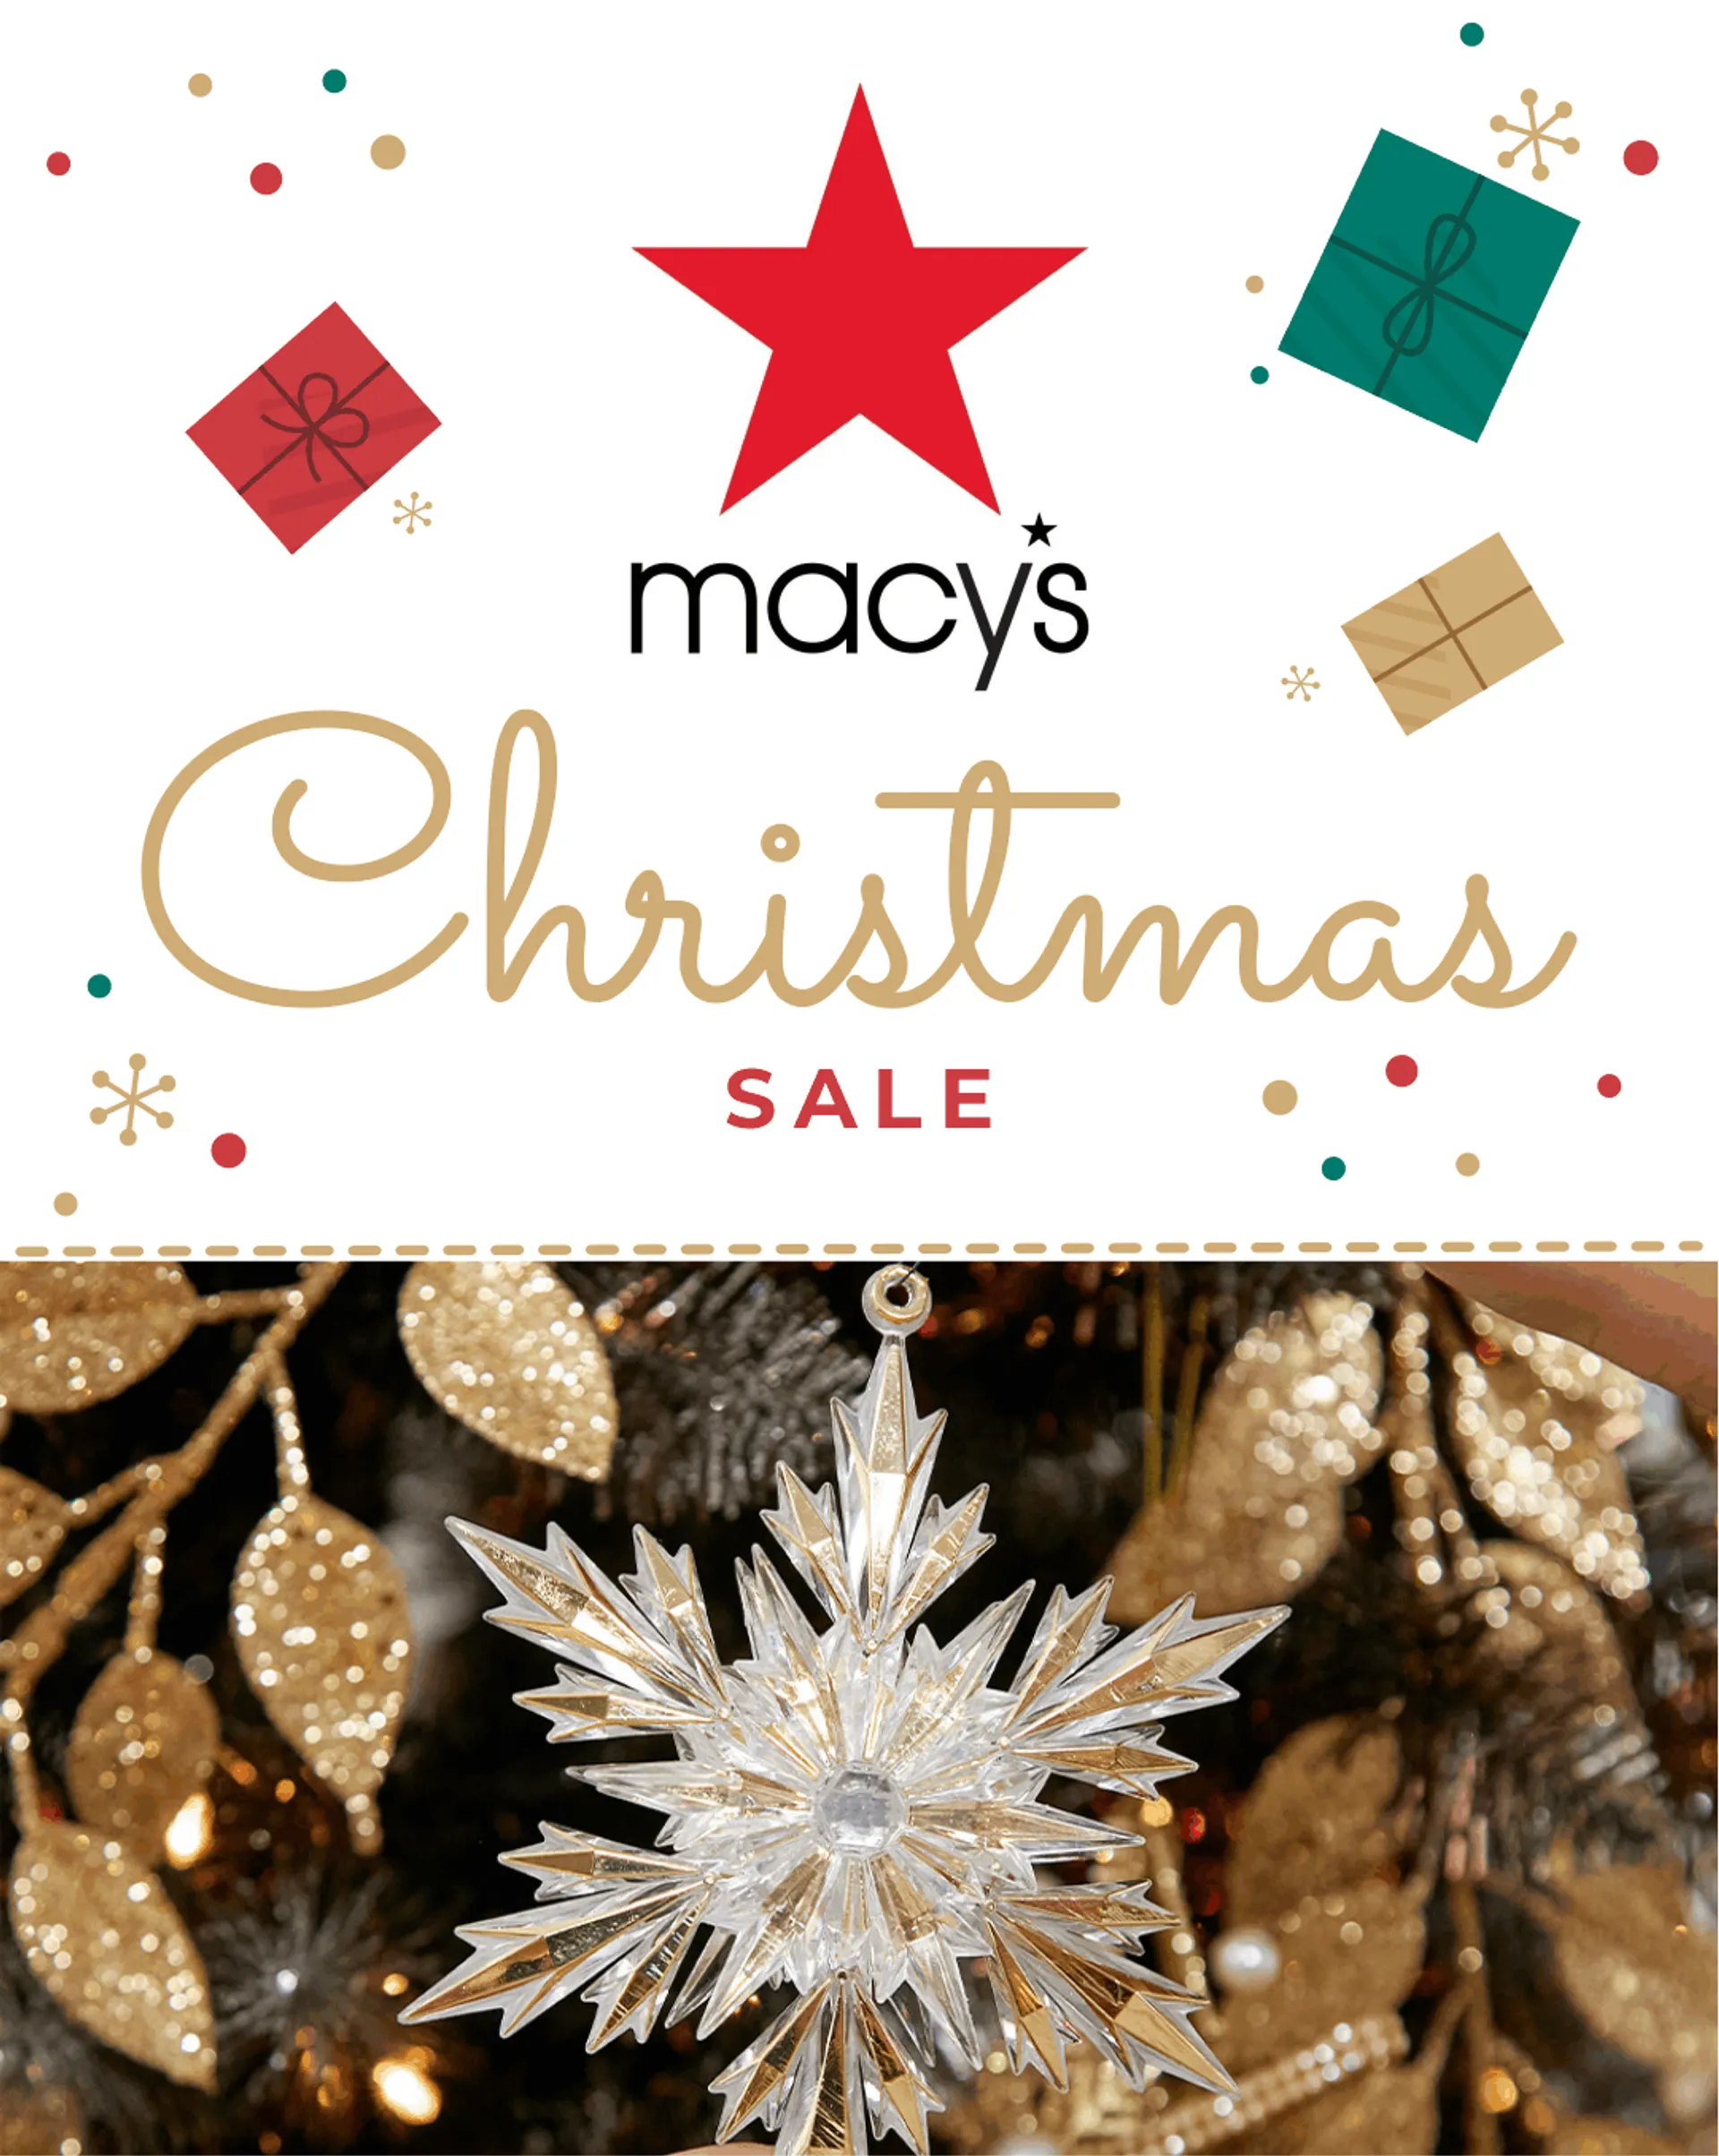 Macy's Christmas sale